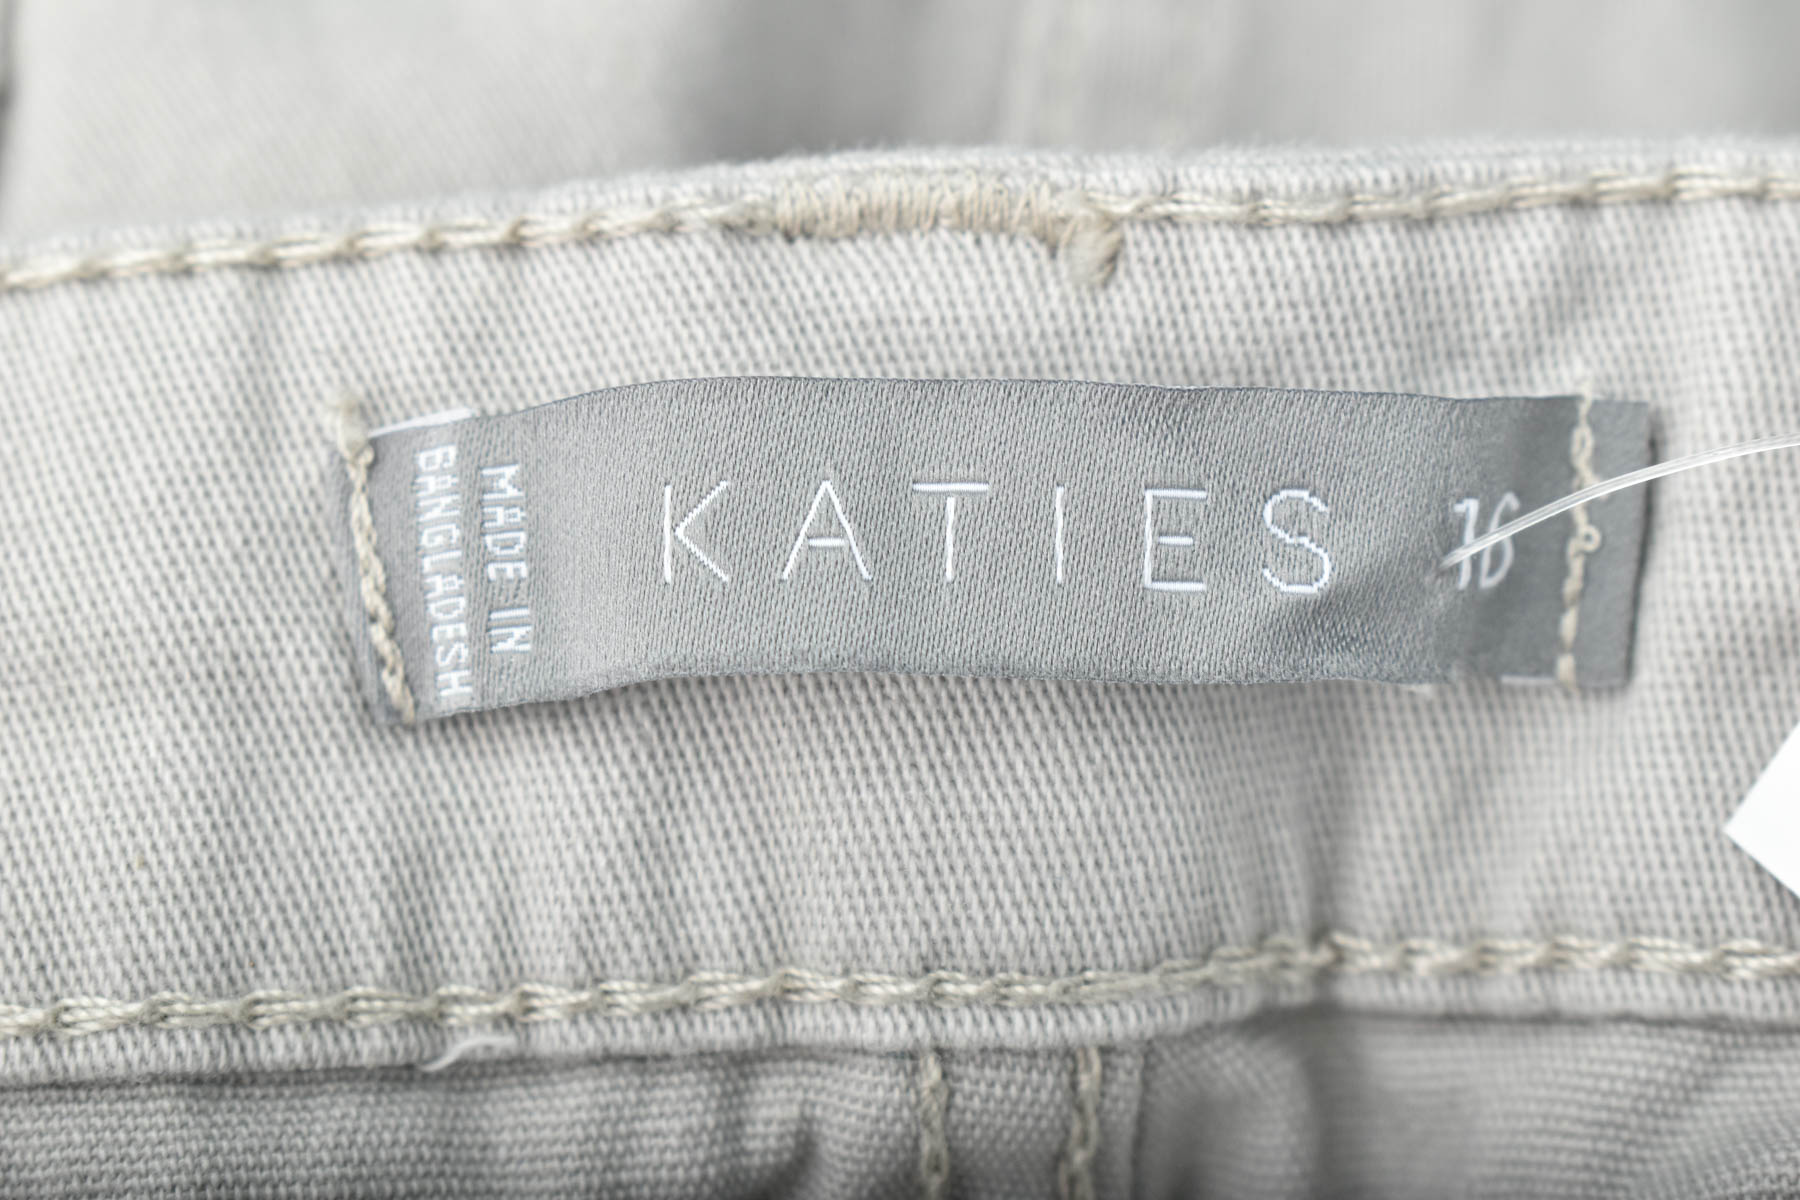 Female shorts - KATIES - 2